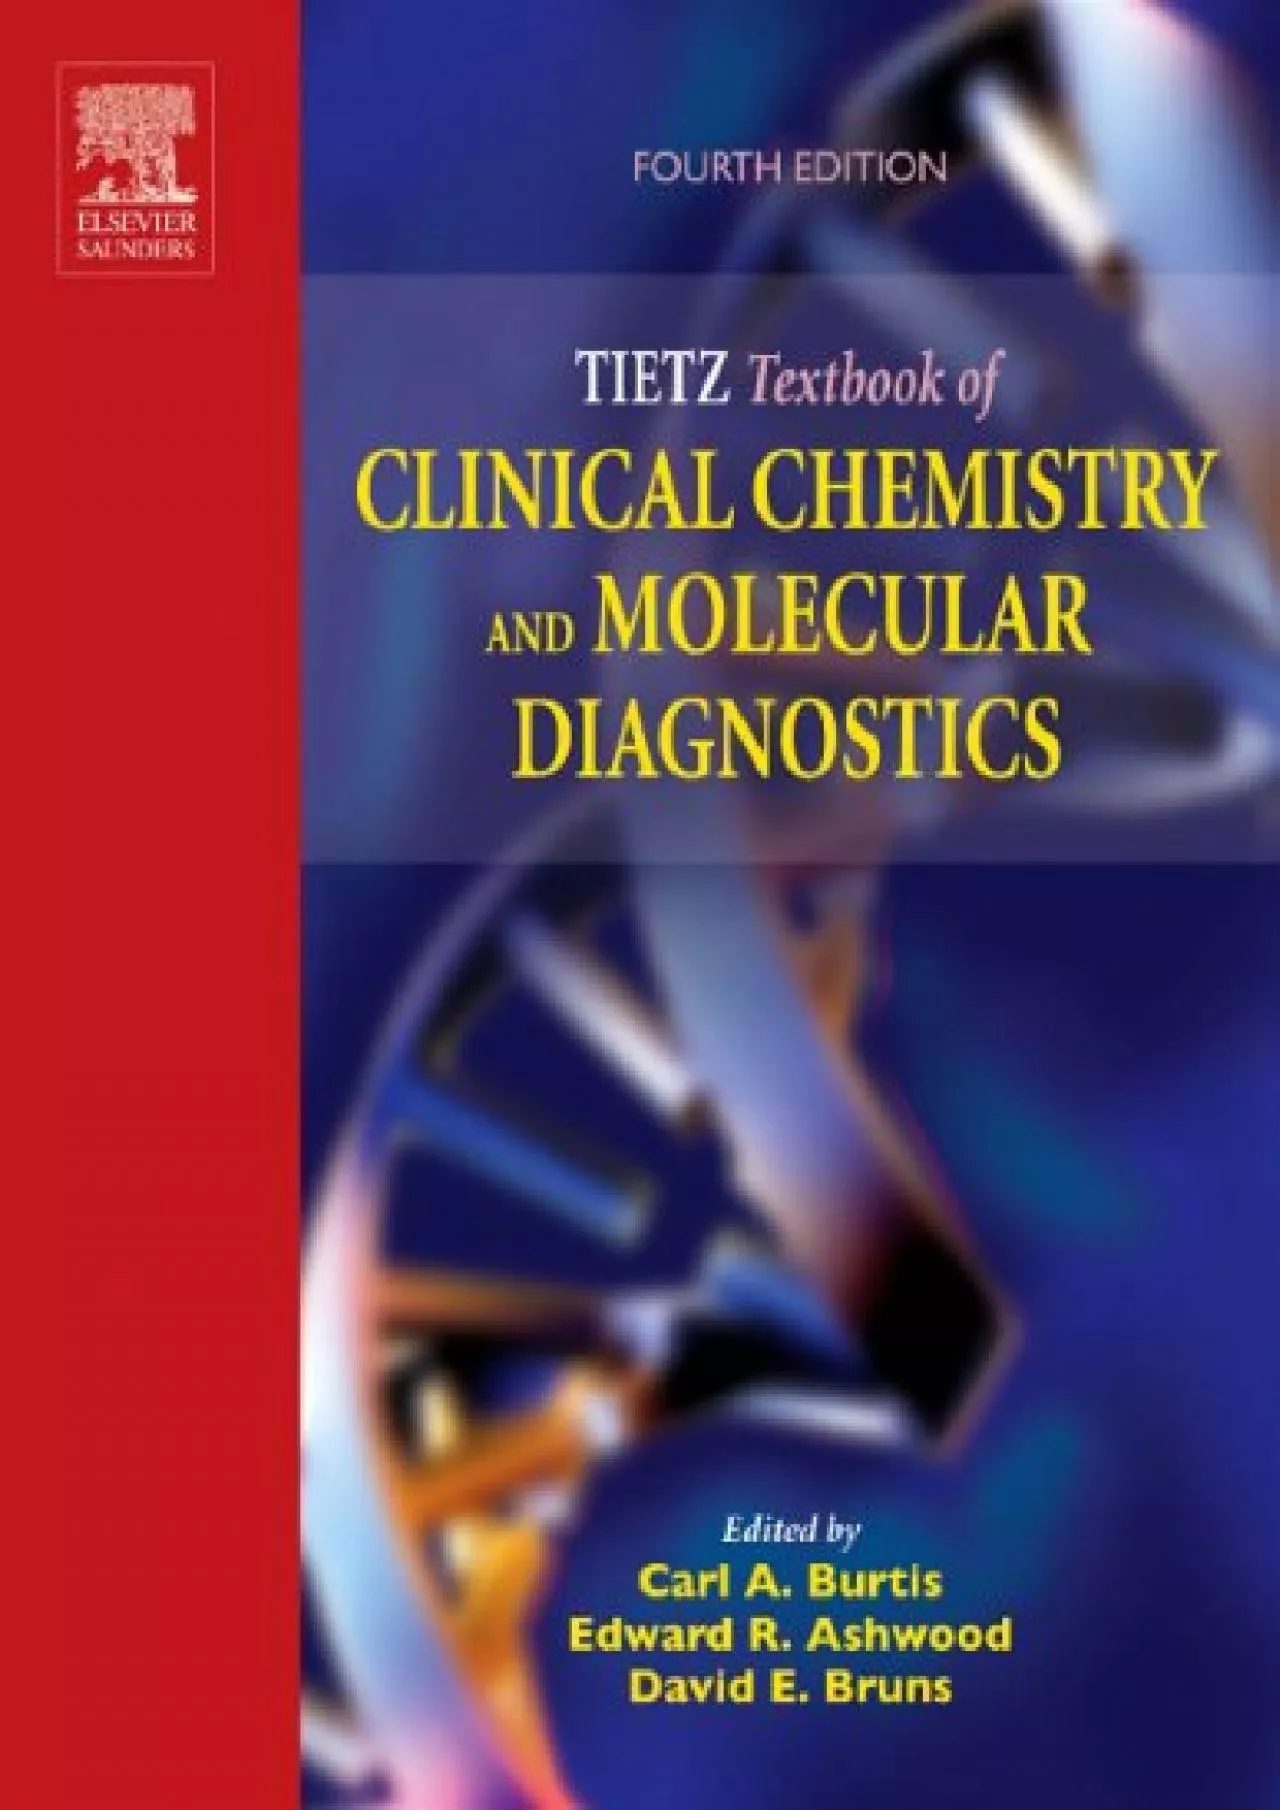 (BOOK)-Tietz Textbook of Clinical Chemistry and Molecular Diagnostics (Tietz Textbook